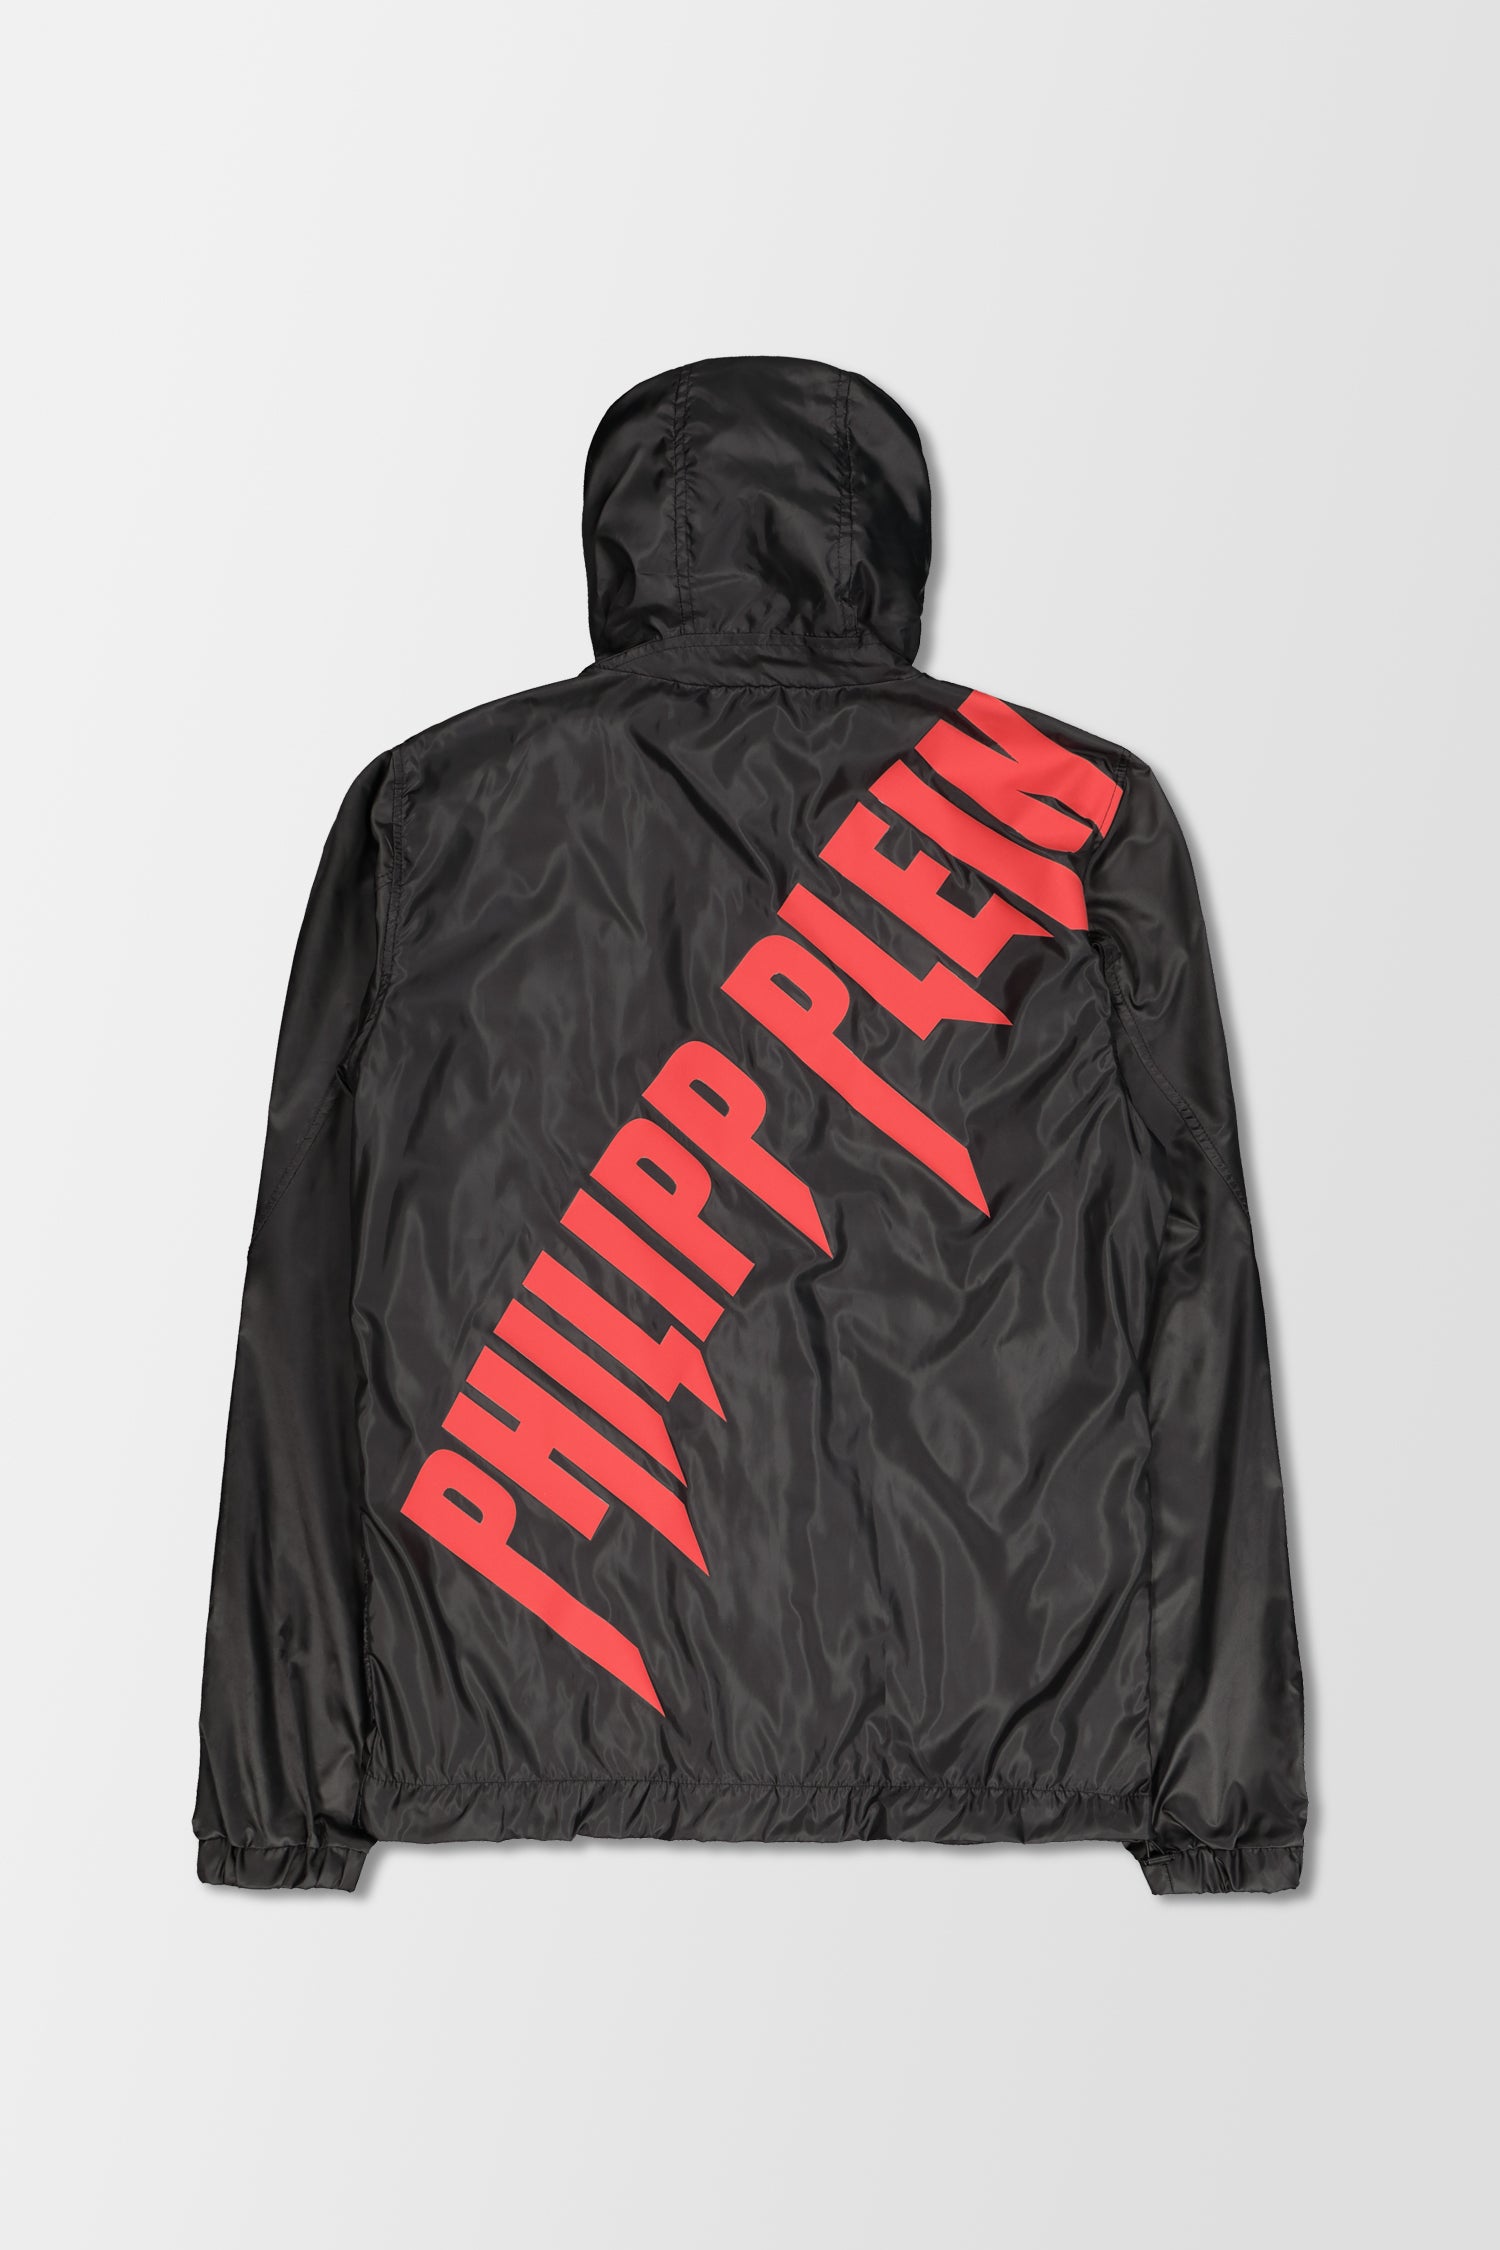 Philipp Plein Black Red Nylon Logo Print Jacket